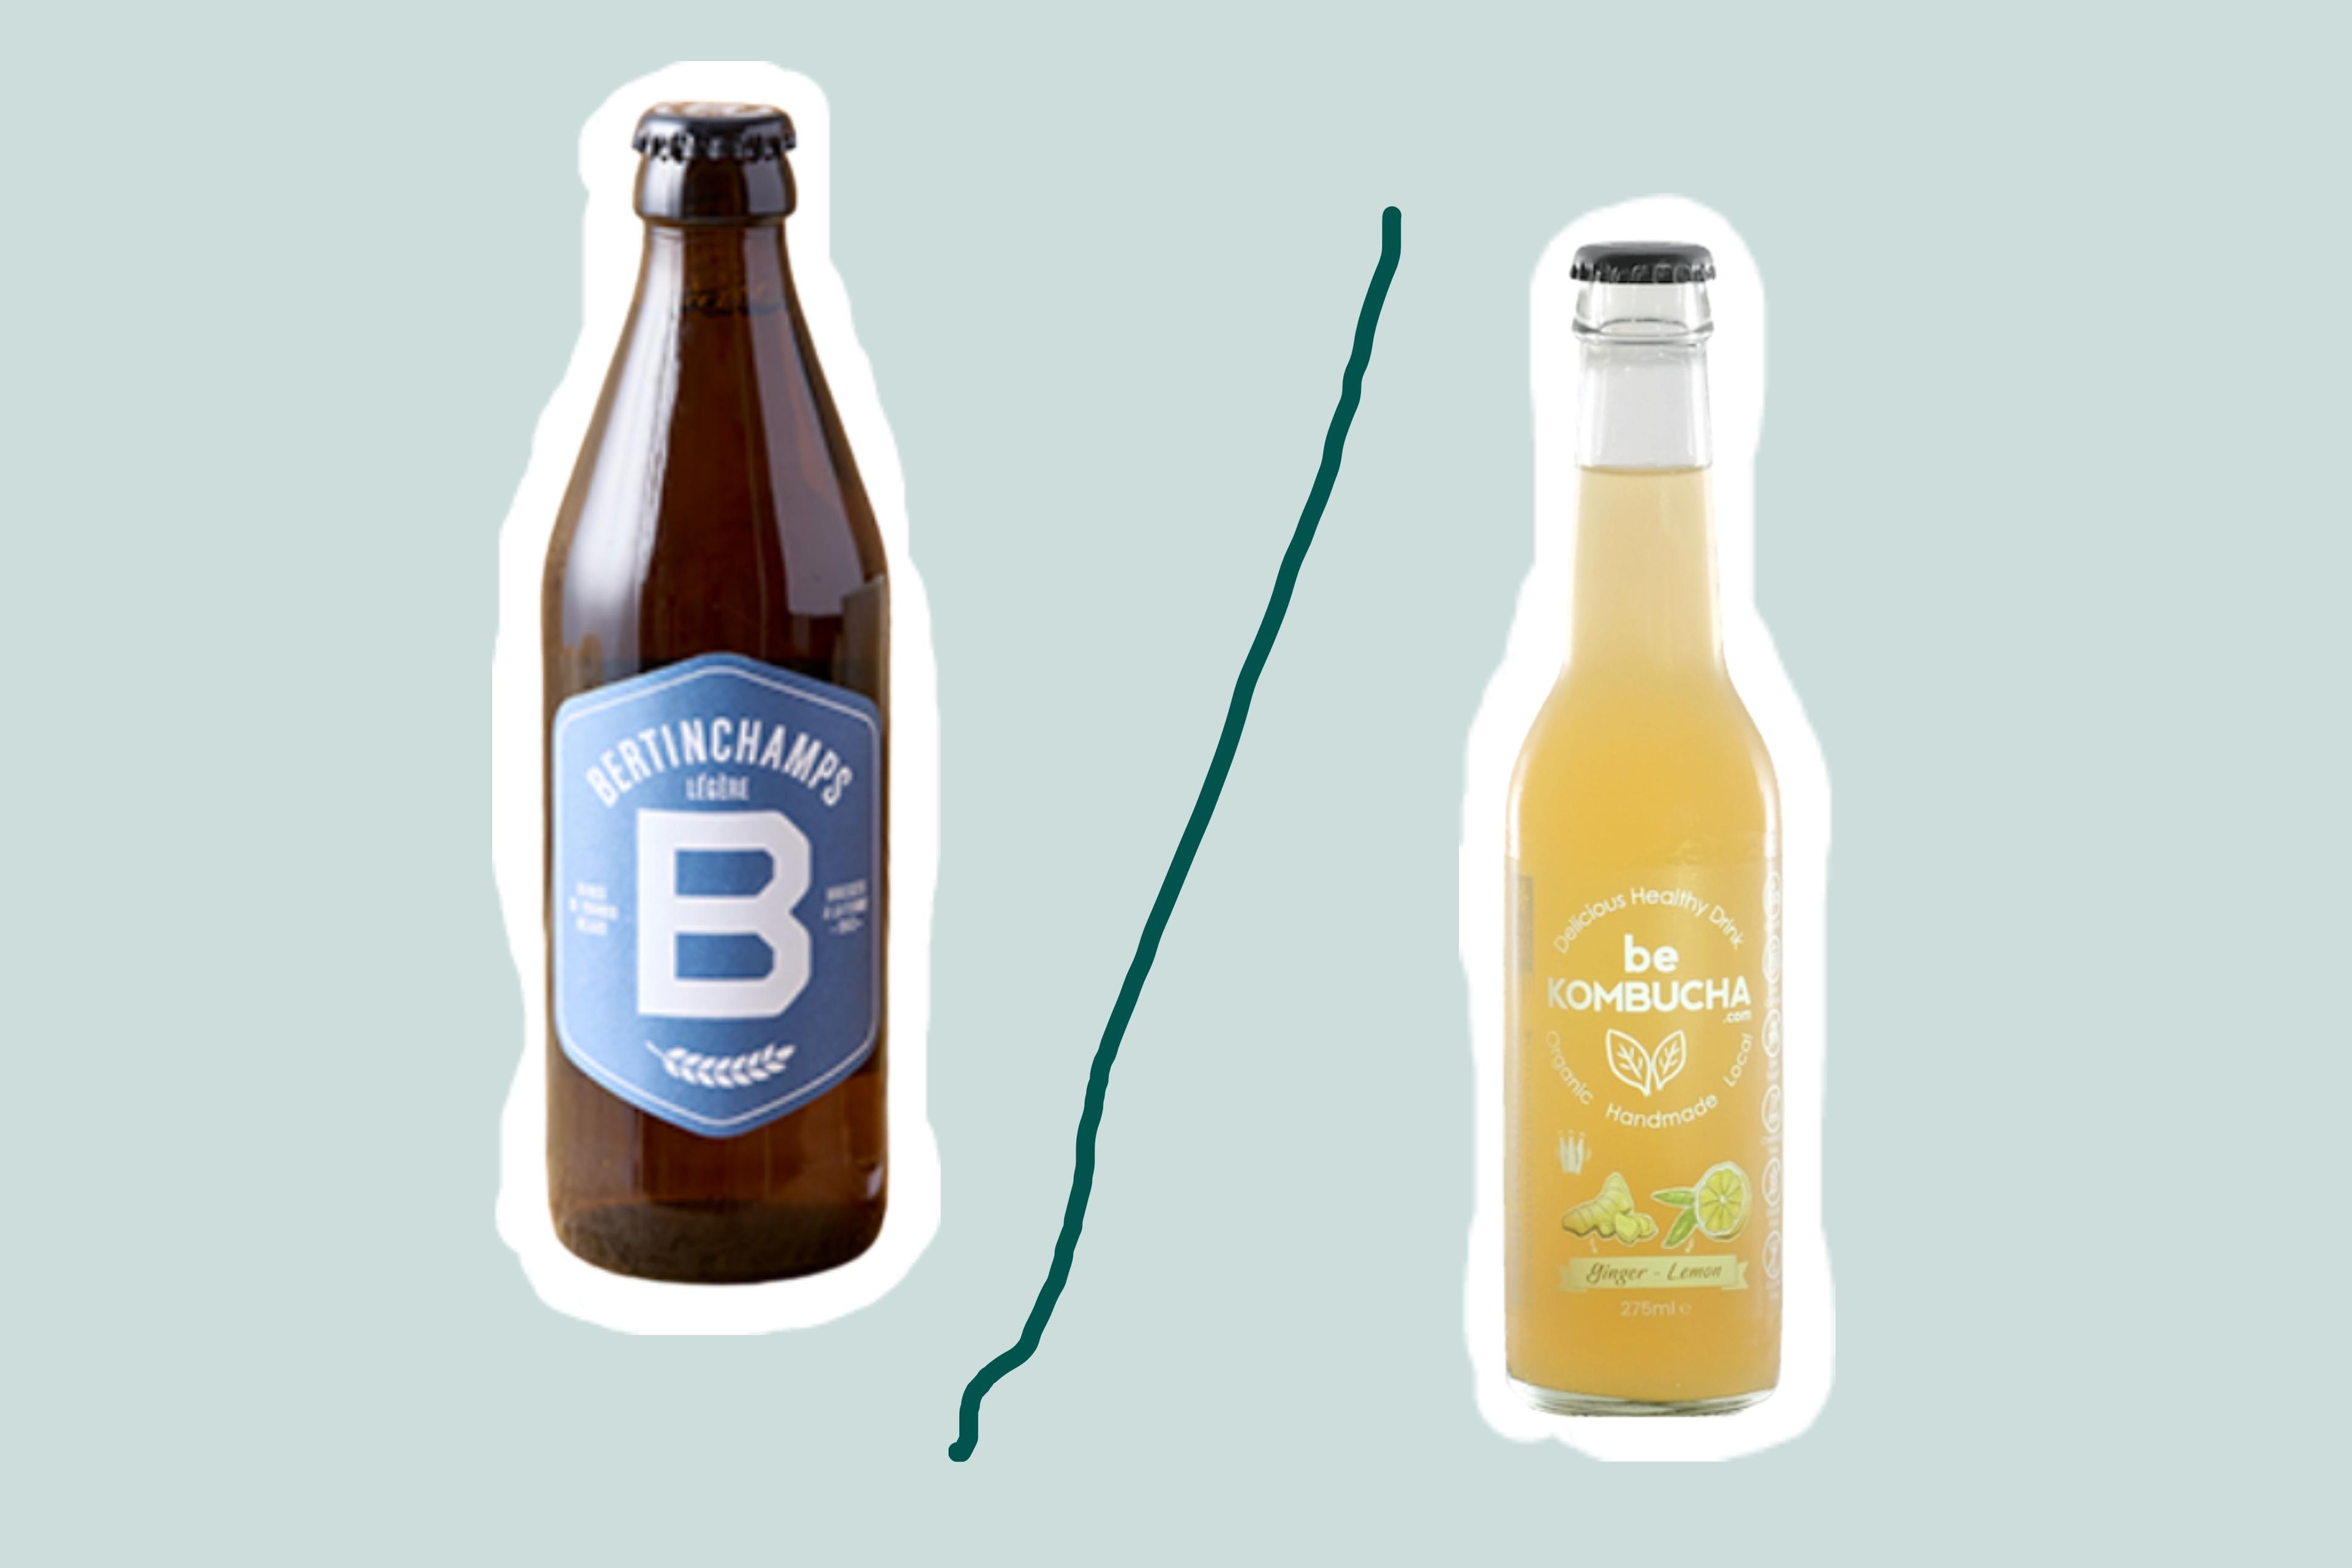 Bière blonde légère Bertinchamps ou kombucha gingembre BeKombucha